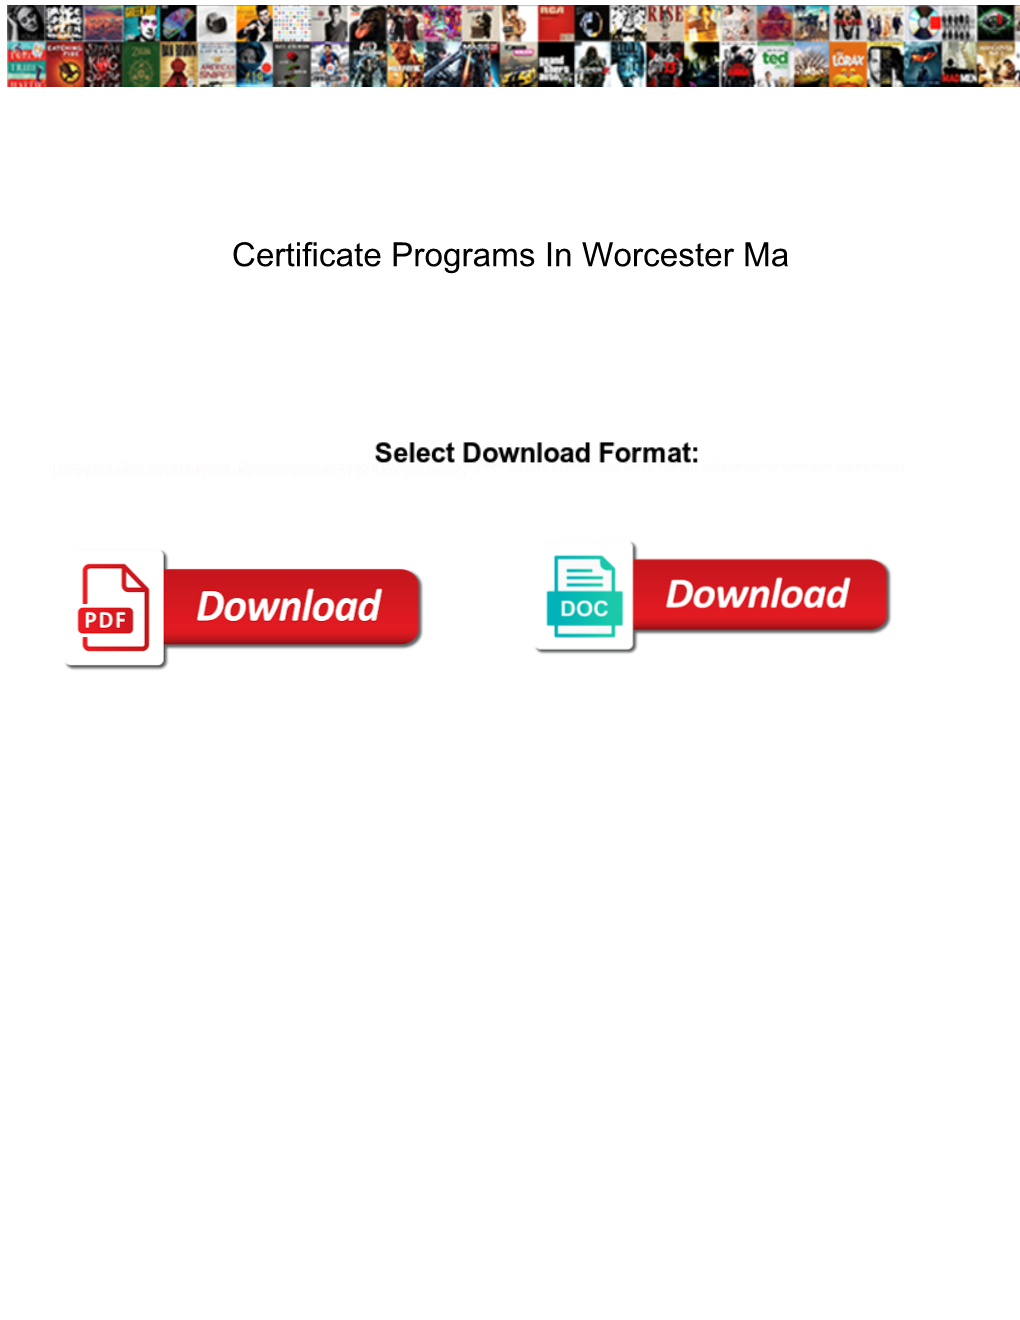 Certificate Programs in Worcester Ma